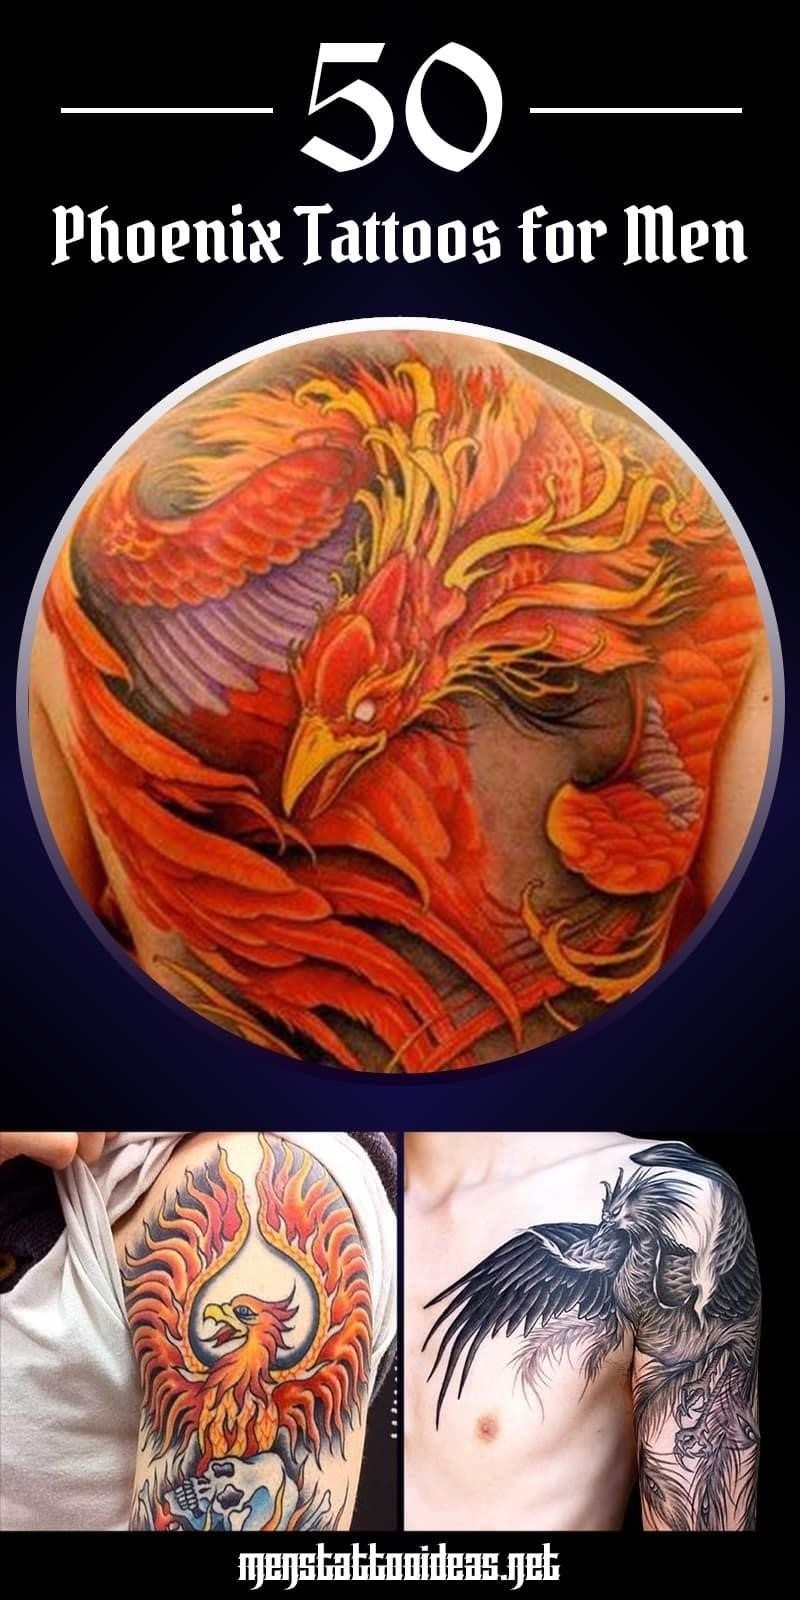 20 Amazing Phoenix Tattoo Design Ideas History Meaning And Symbolize   Saved Tattoo